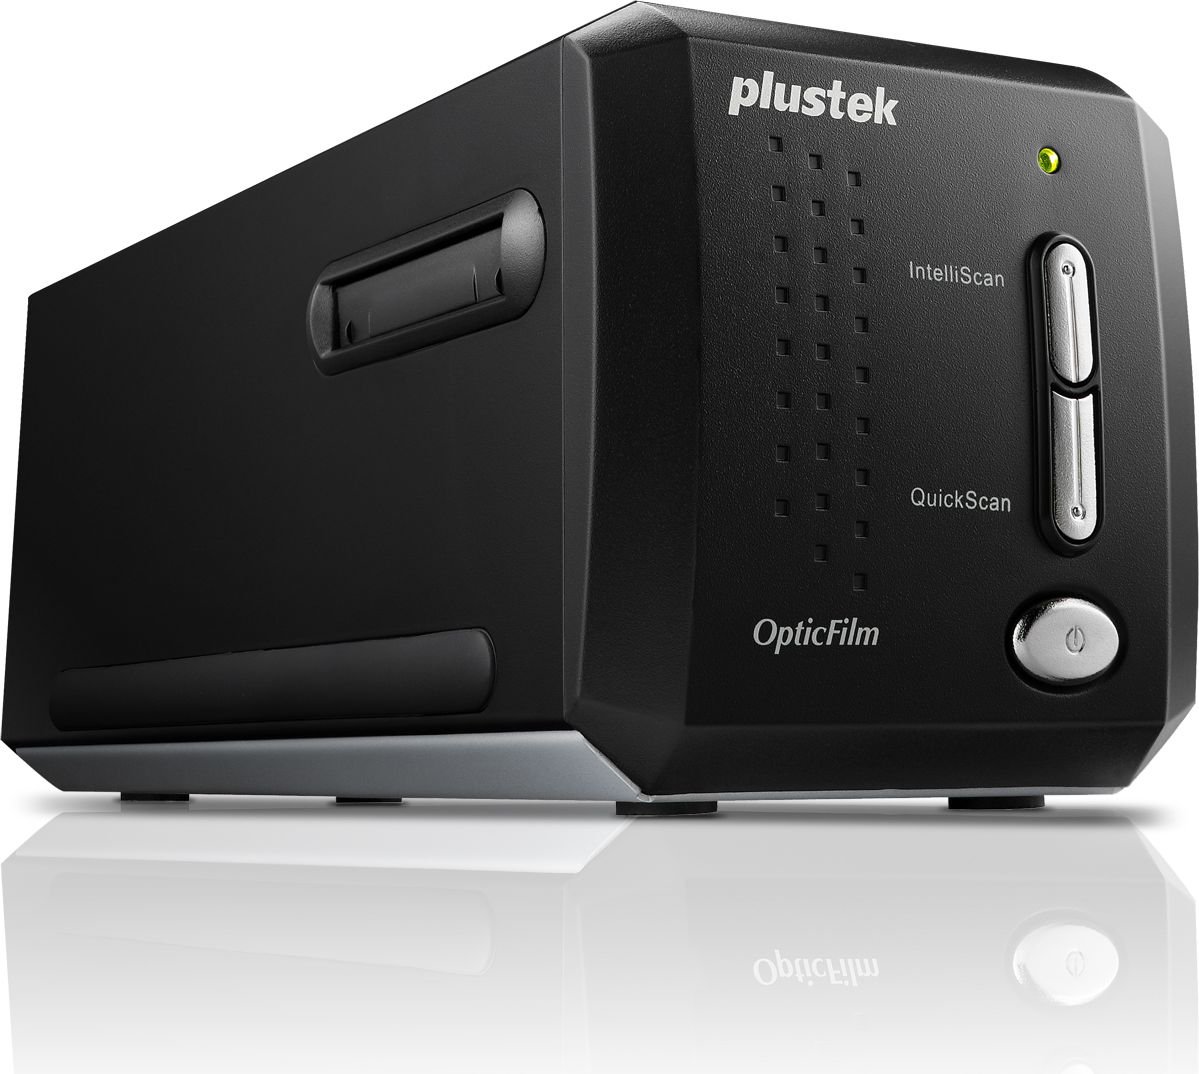 Scanner plustek OpticFilm 8200I-SE (PLUS-OF-8200I-SE)